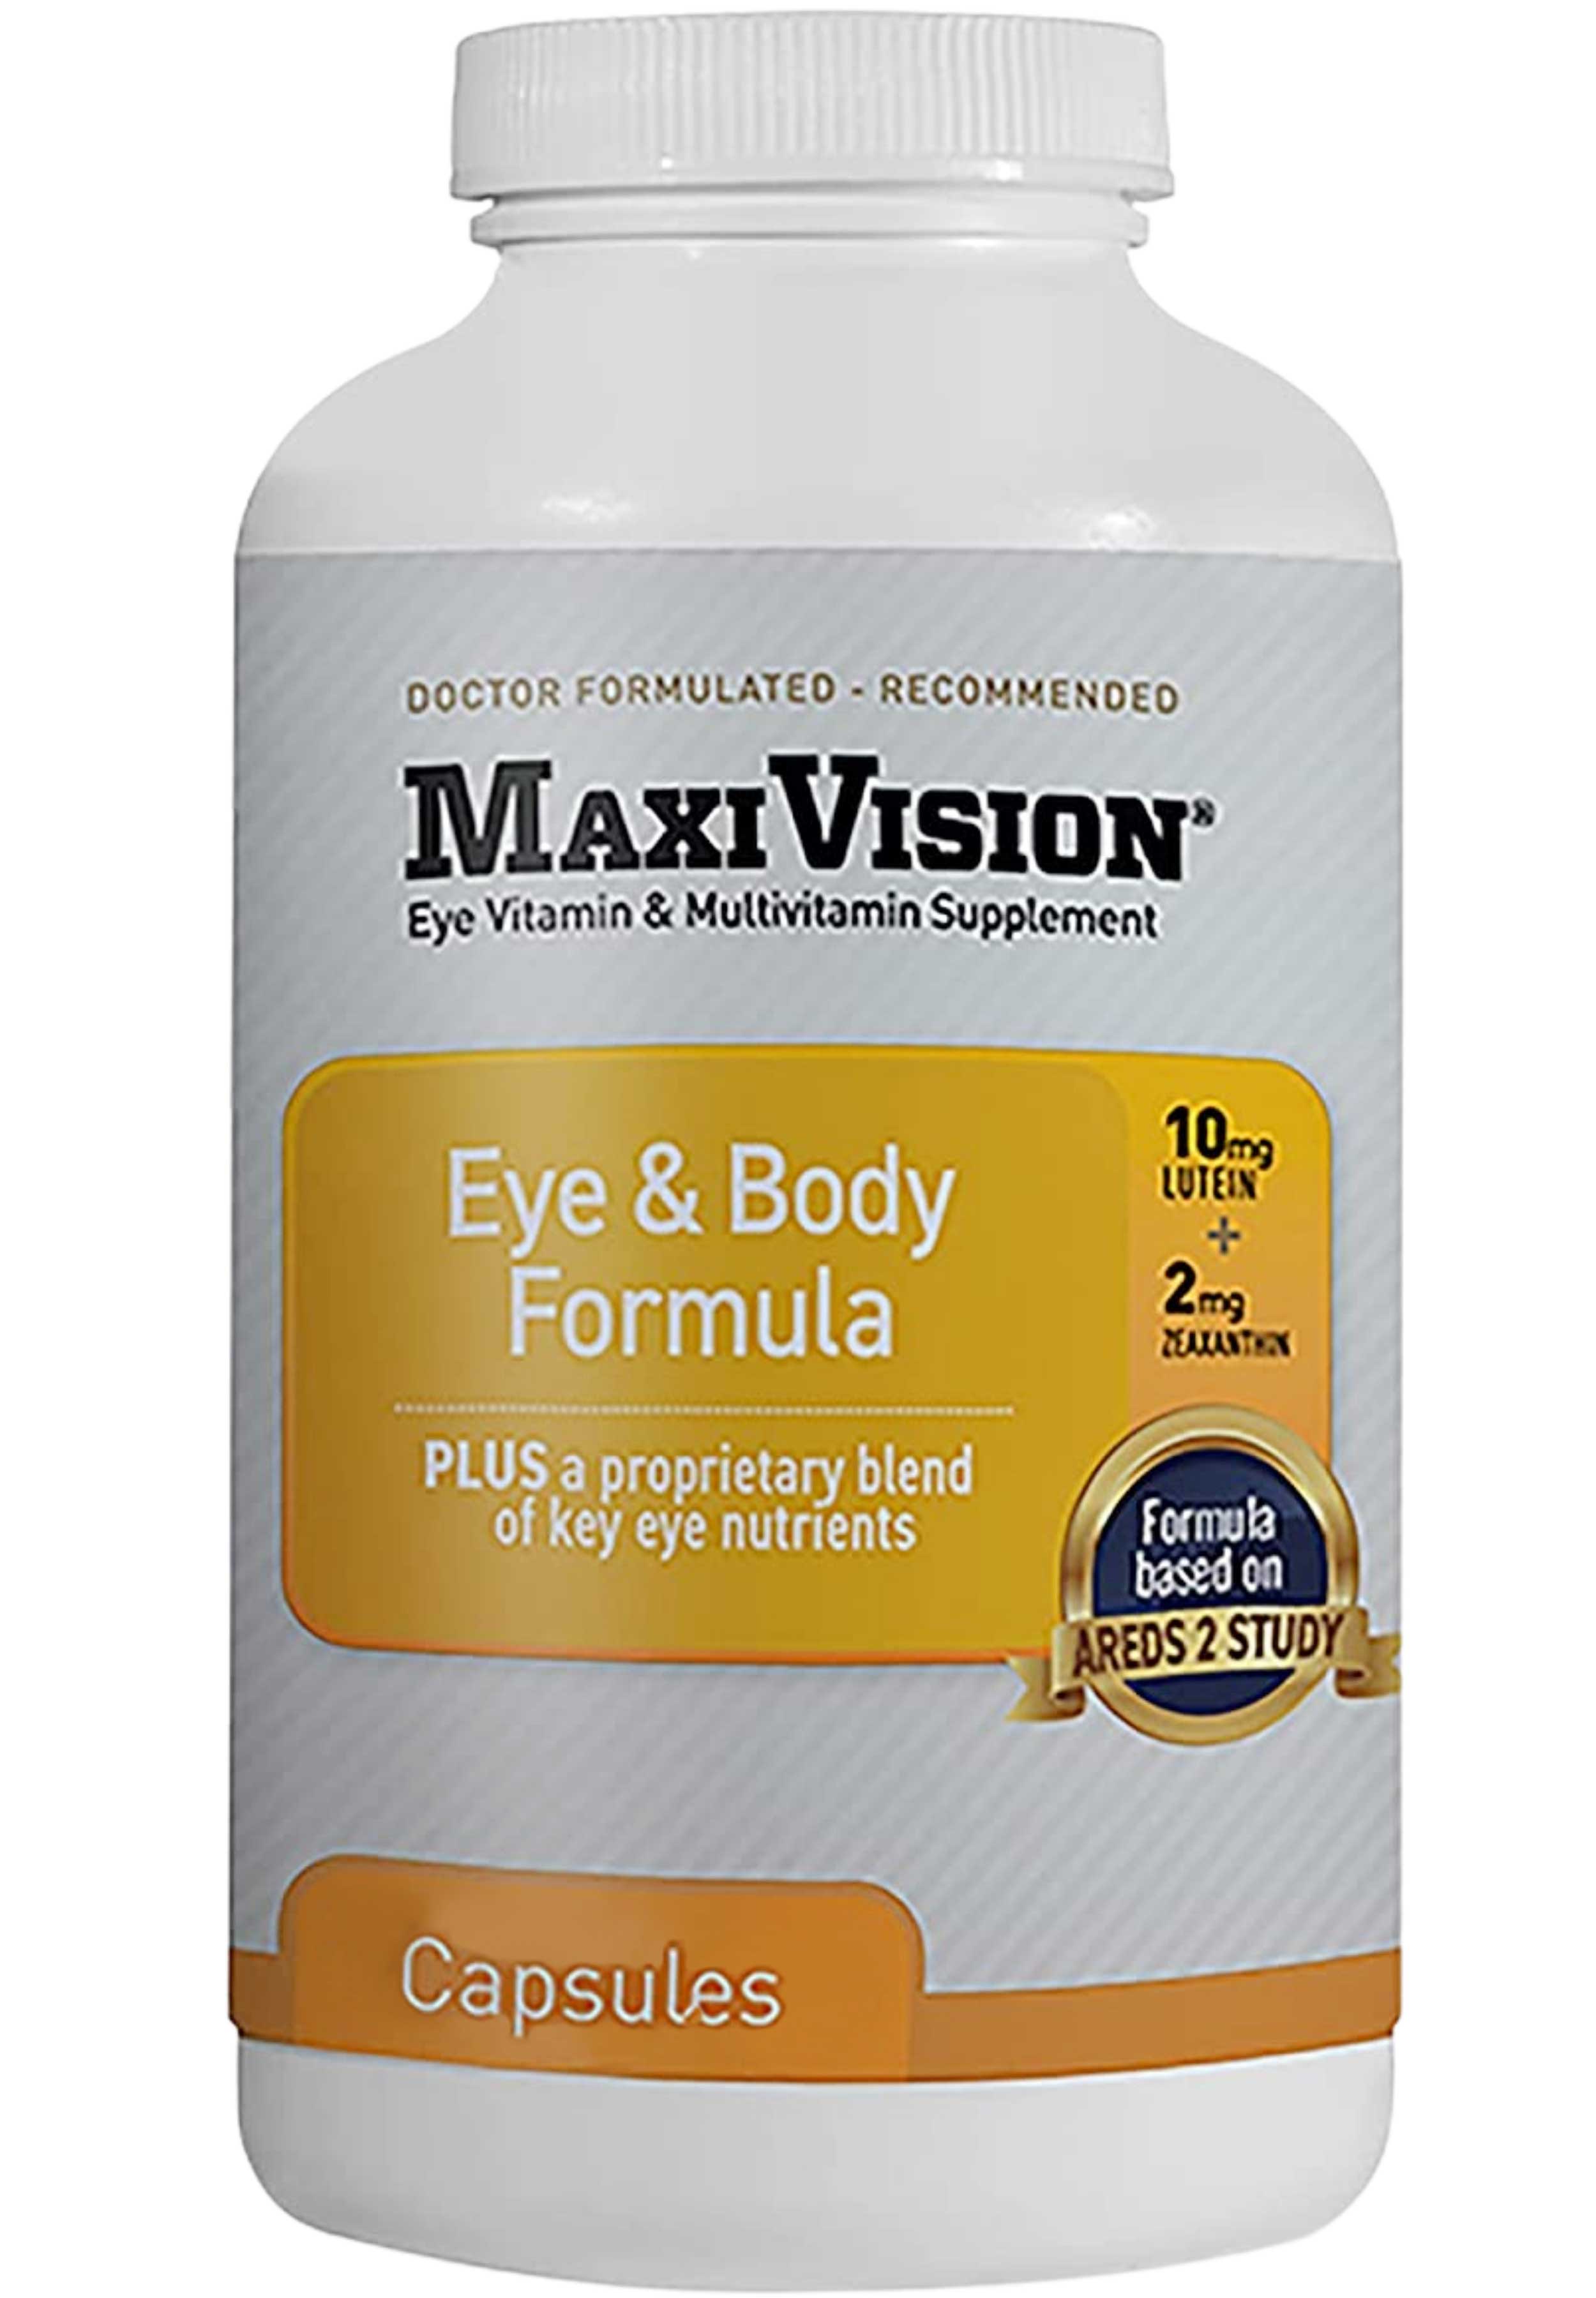 MaxiVision Eye & Body Formula